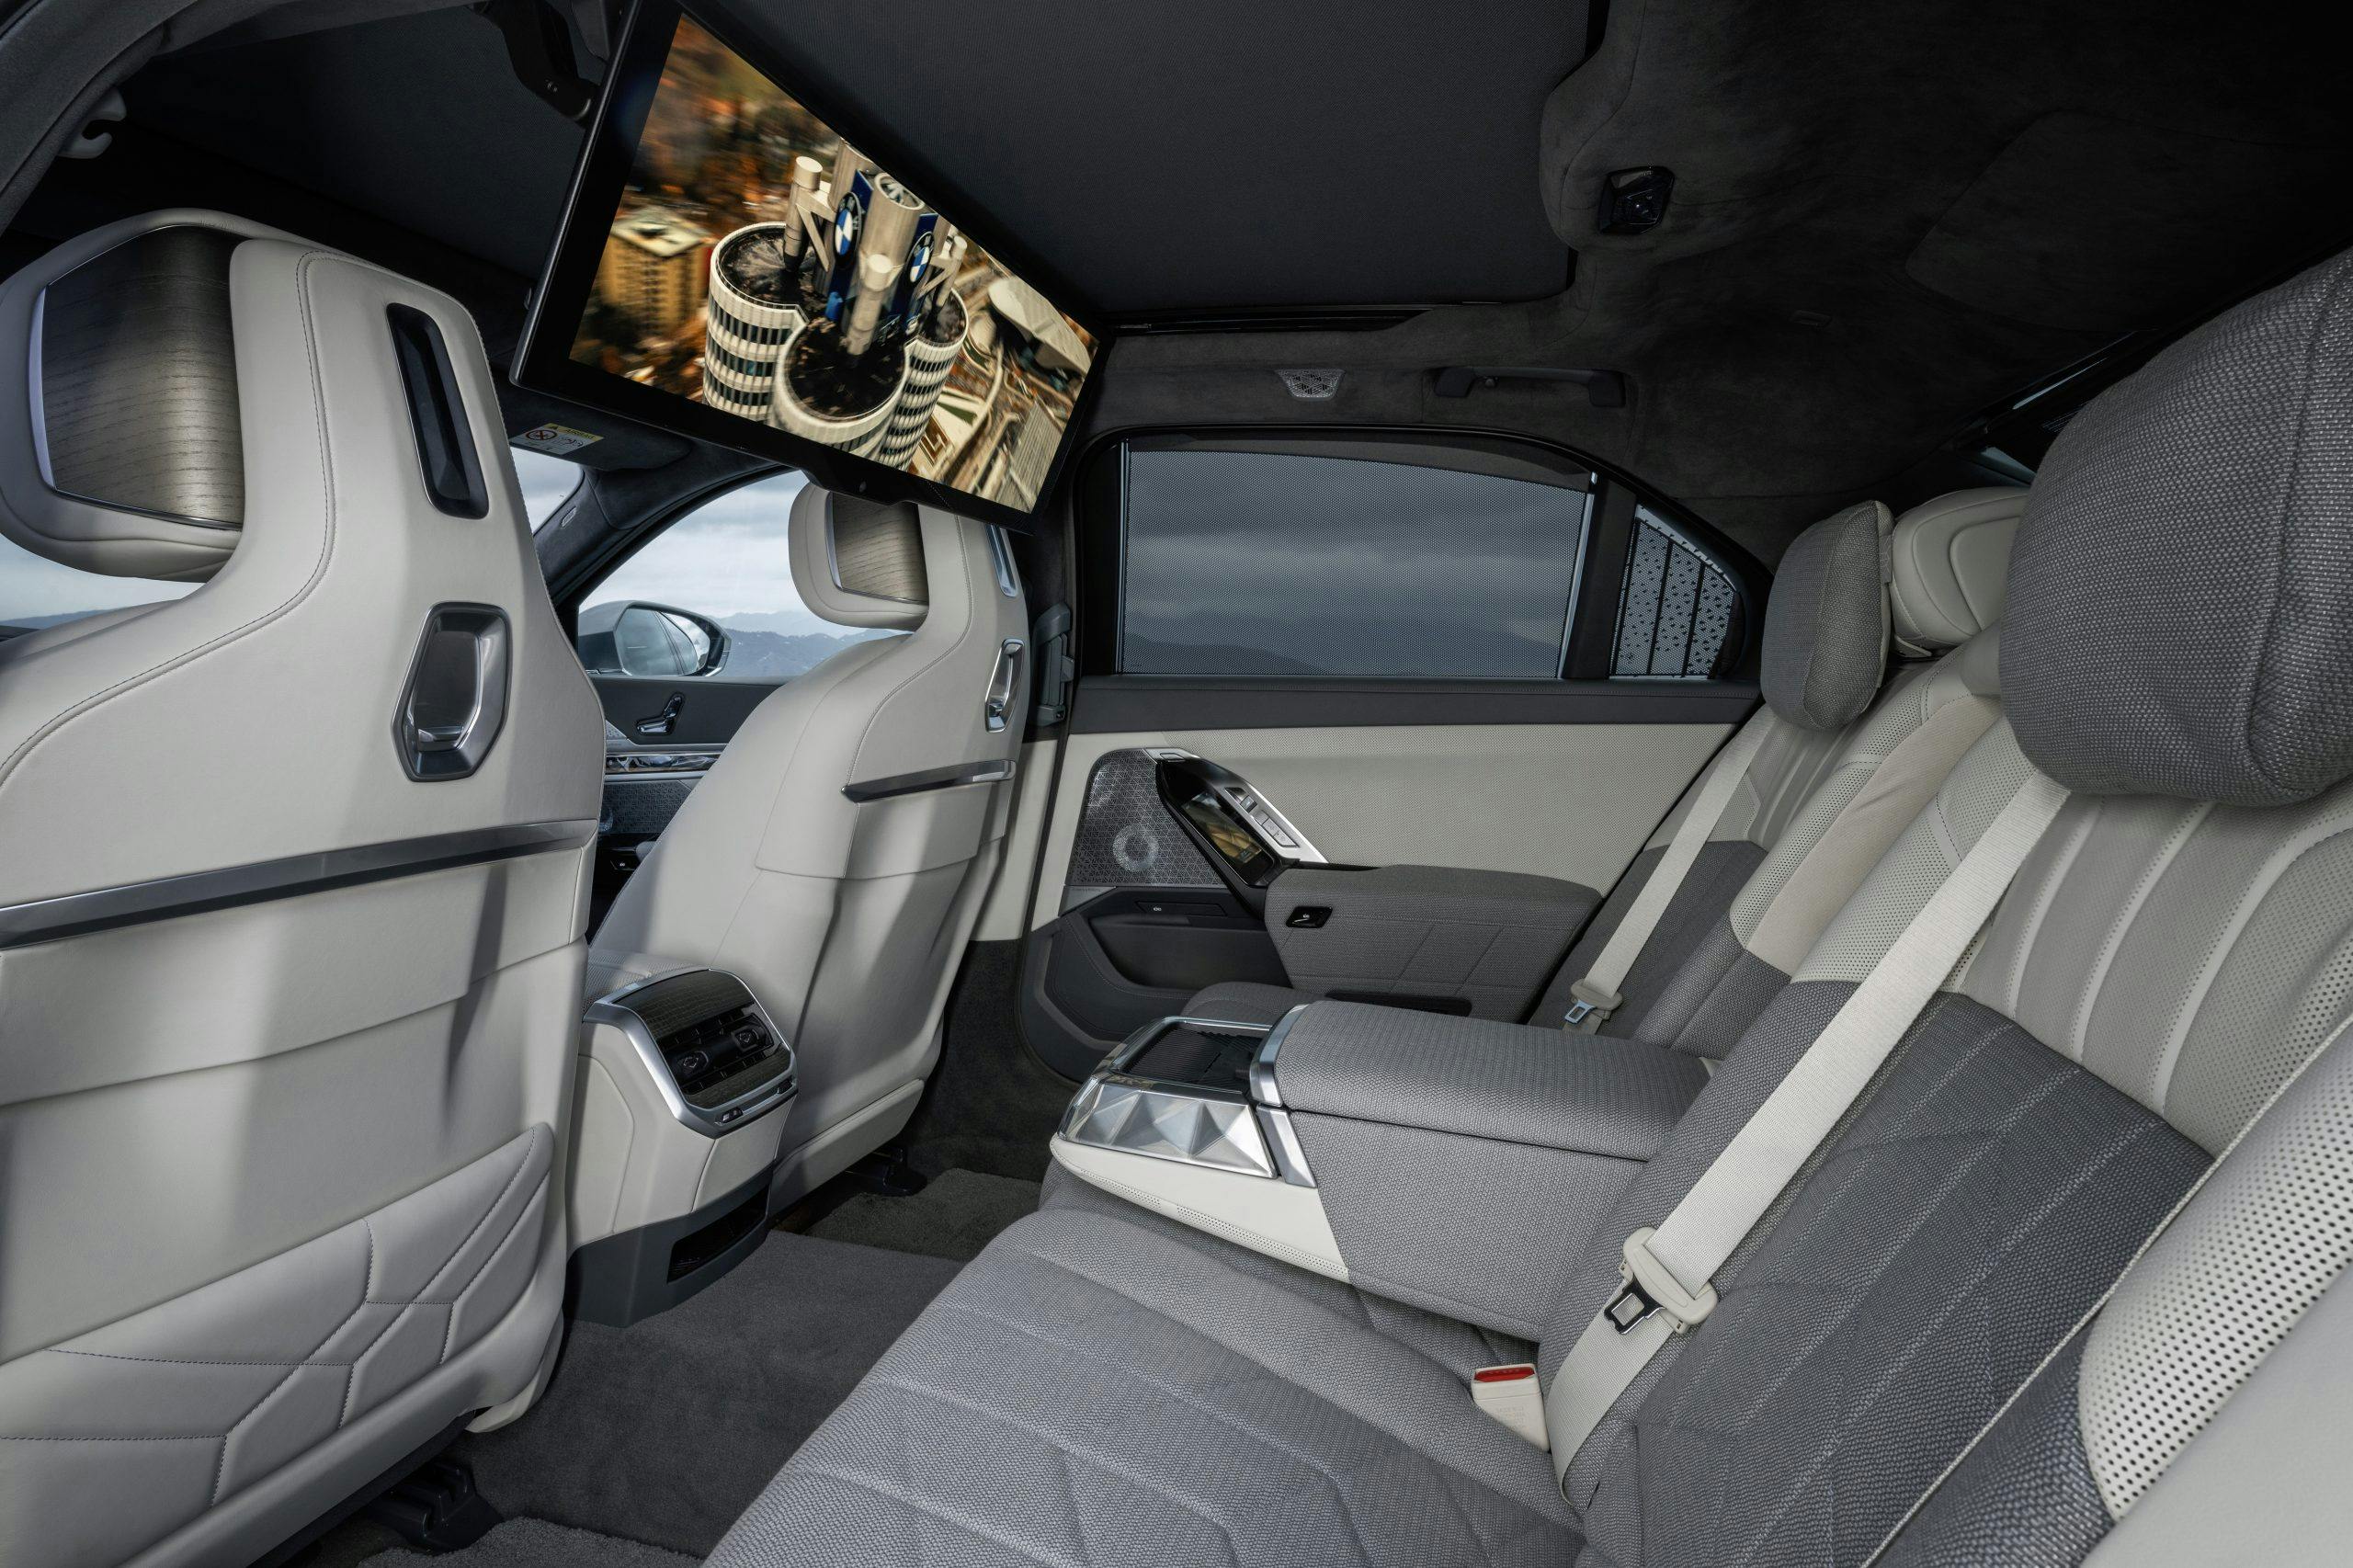 BMW 7-Series interior rear seat